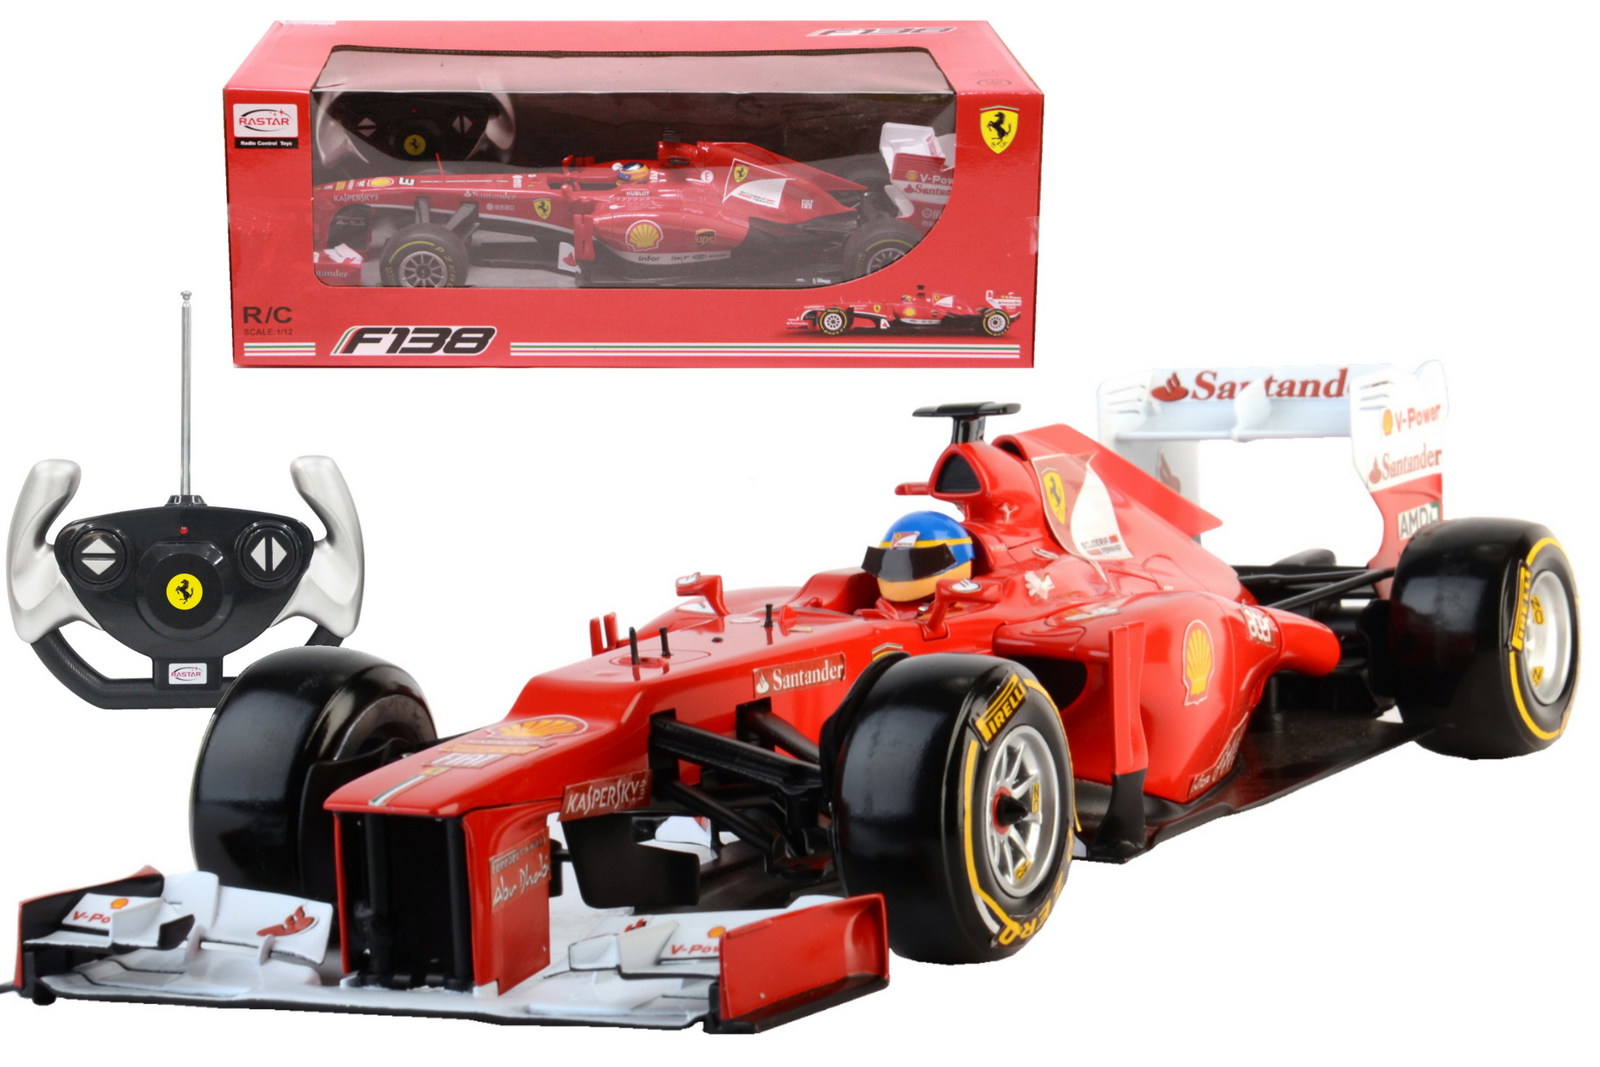 Ferrari F1 RC Racing Car Buy Toys Online at ihartTOYS Australia